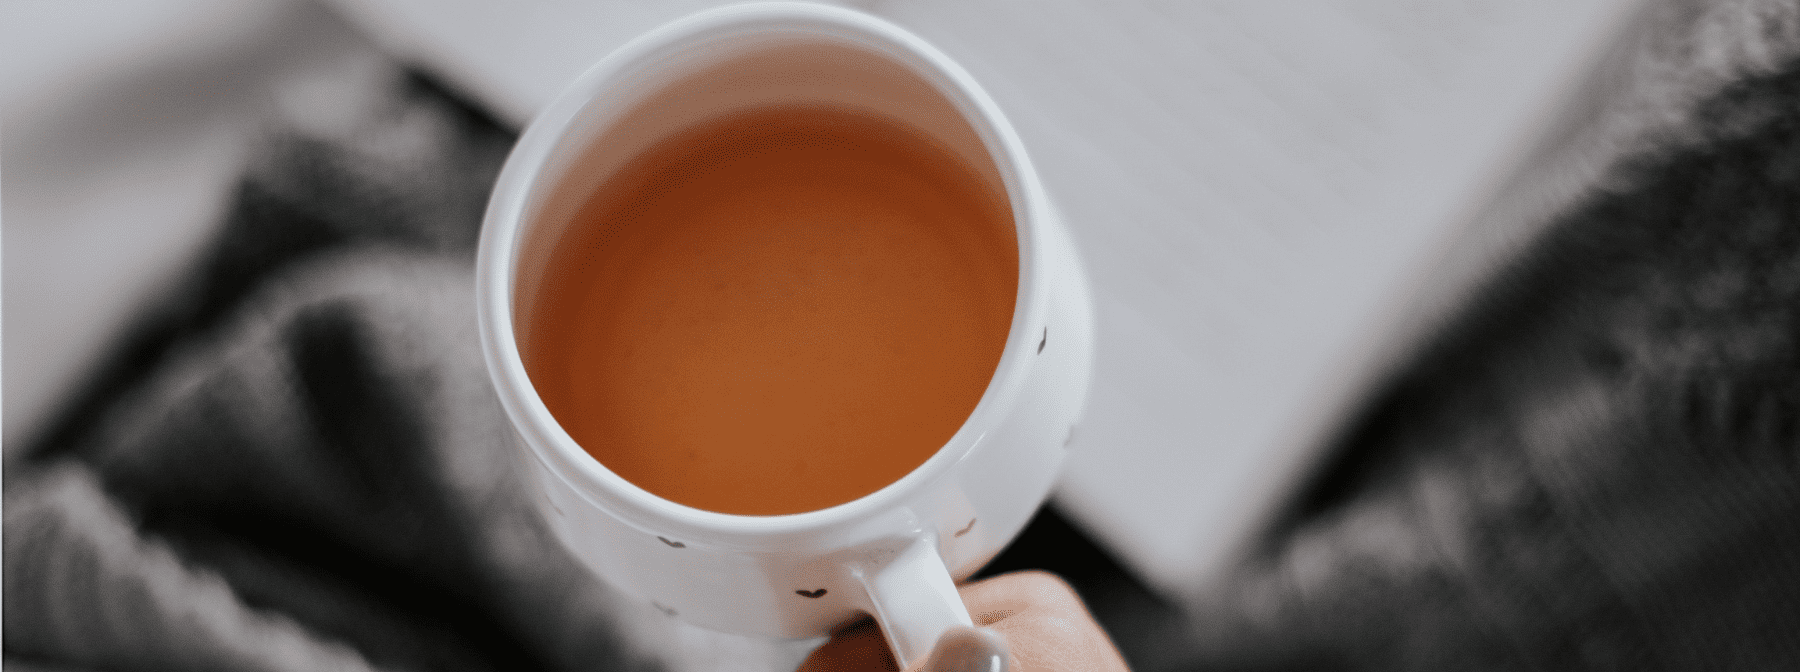 Here’s the Tea: Studies Show Drinking Tea Boosts Longevity